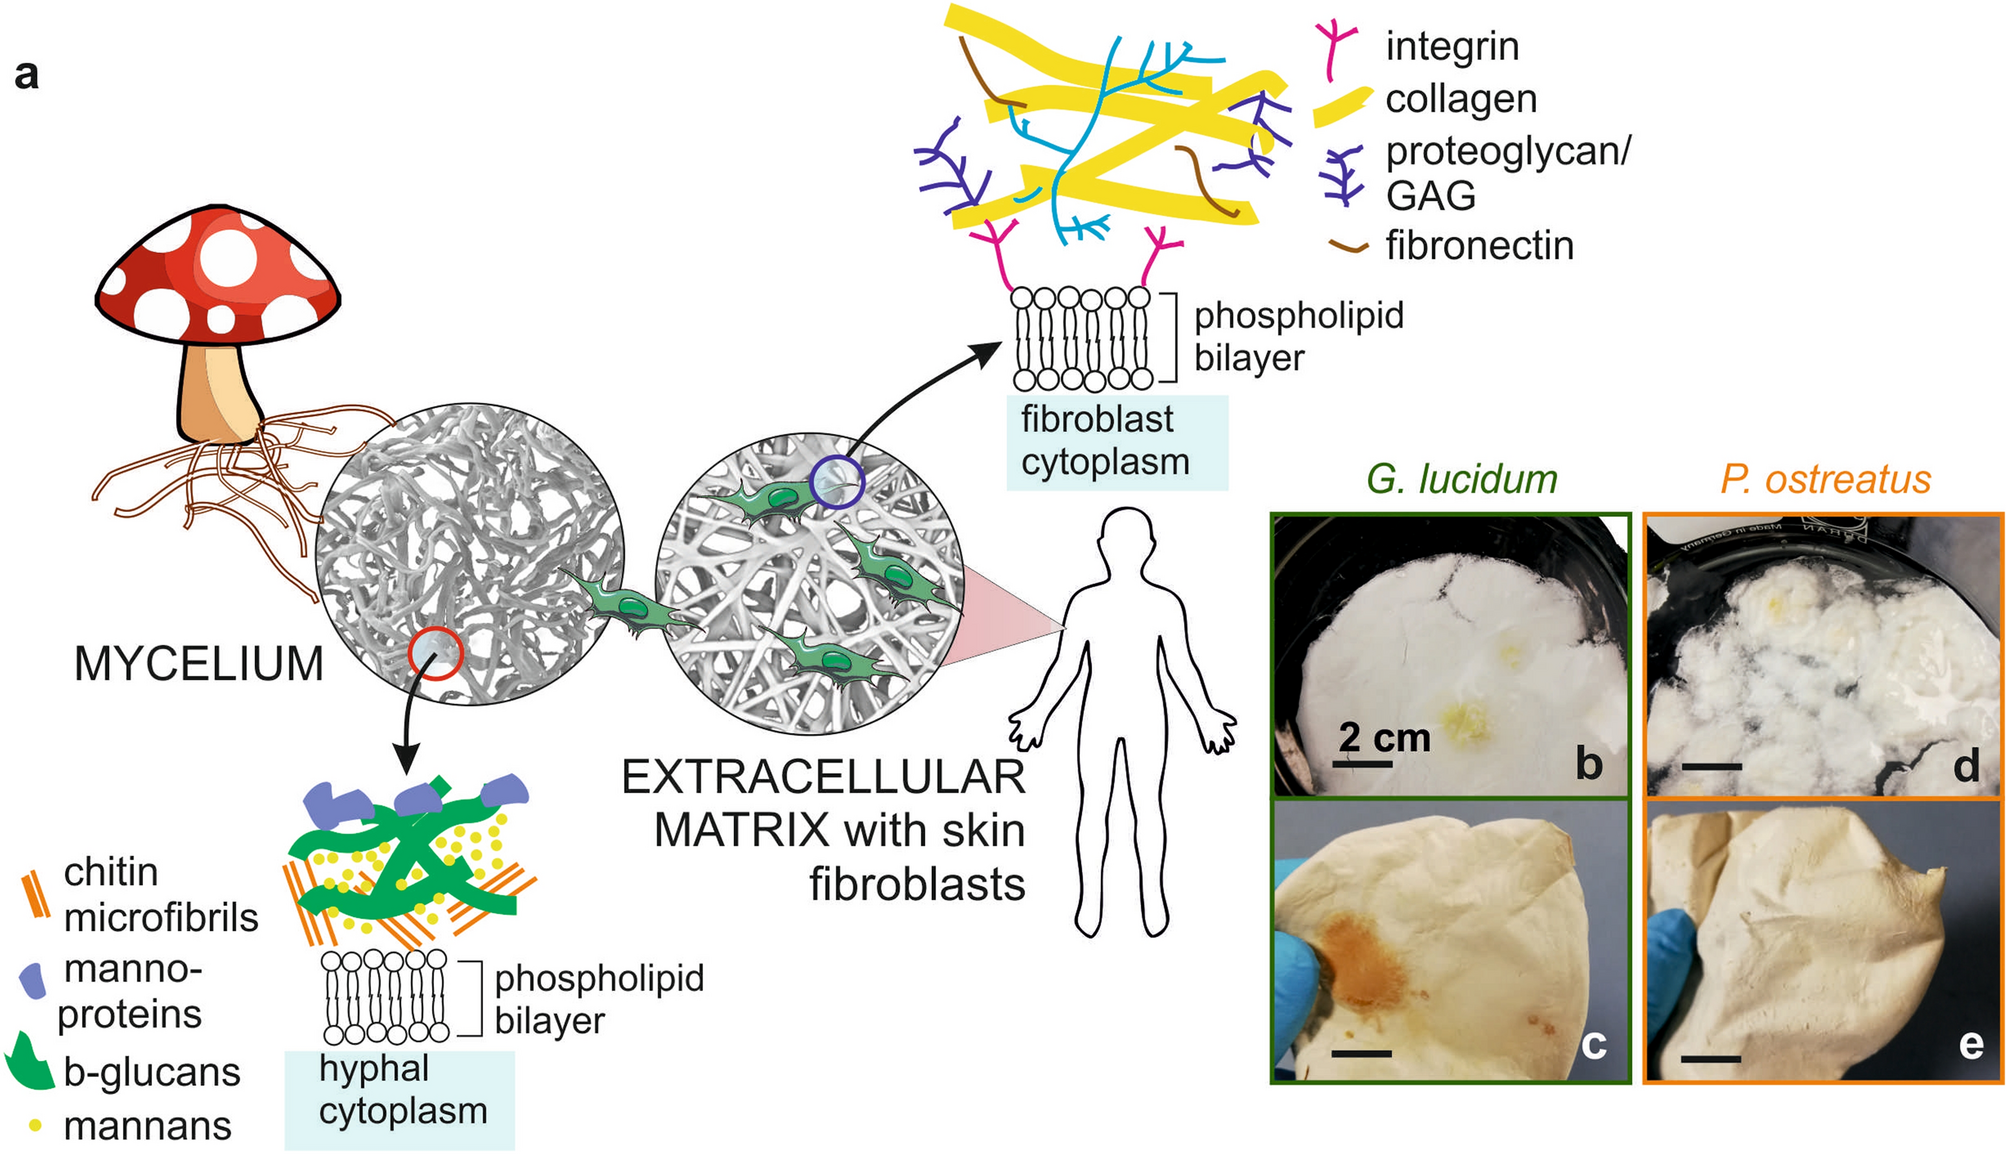 Advanced mycelium materials as potential self-growing biomedical